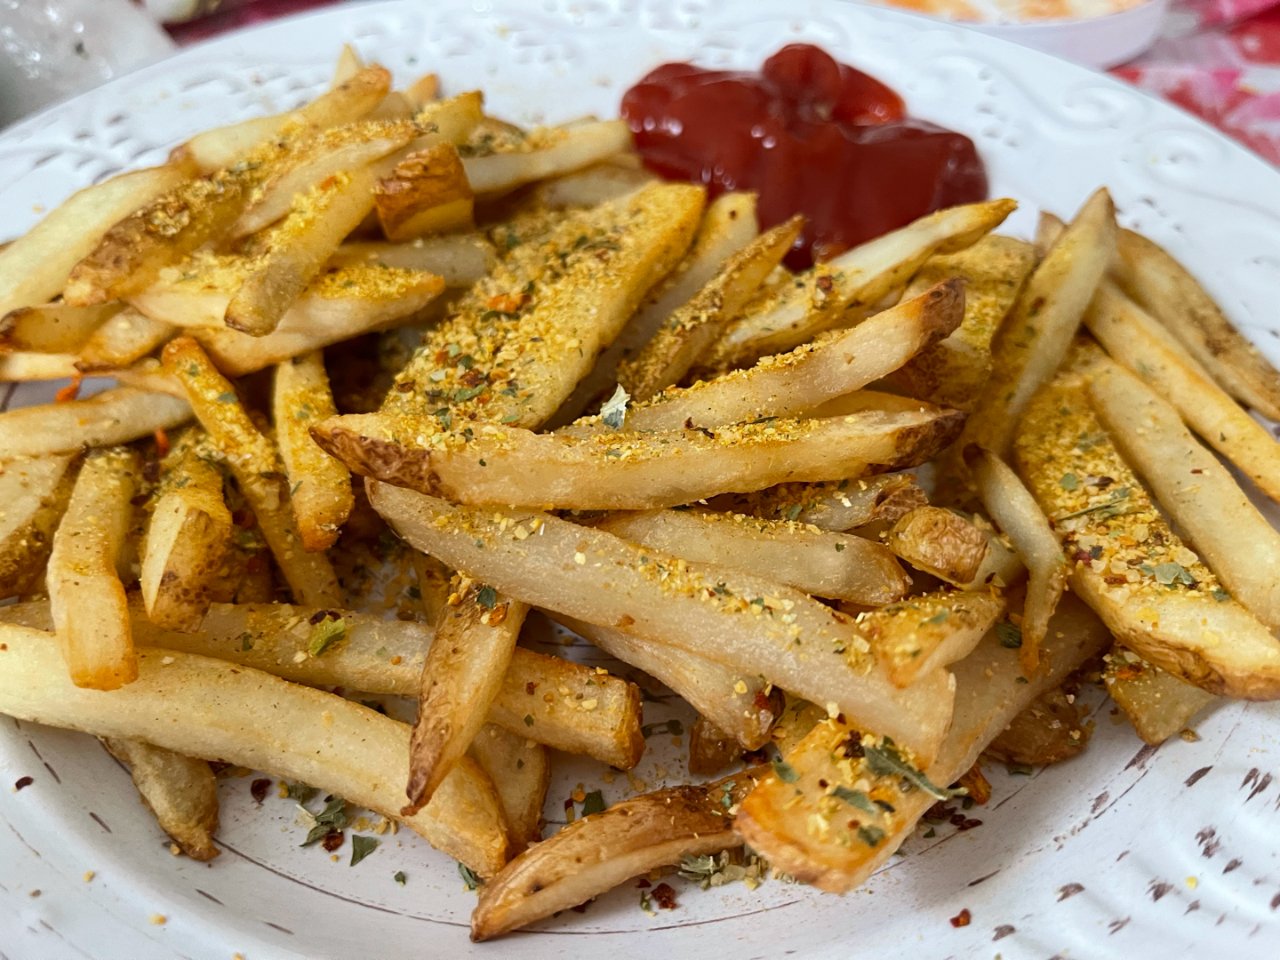 Fries 🍟 